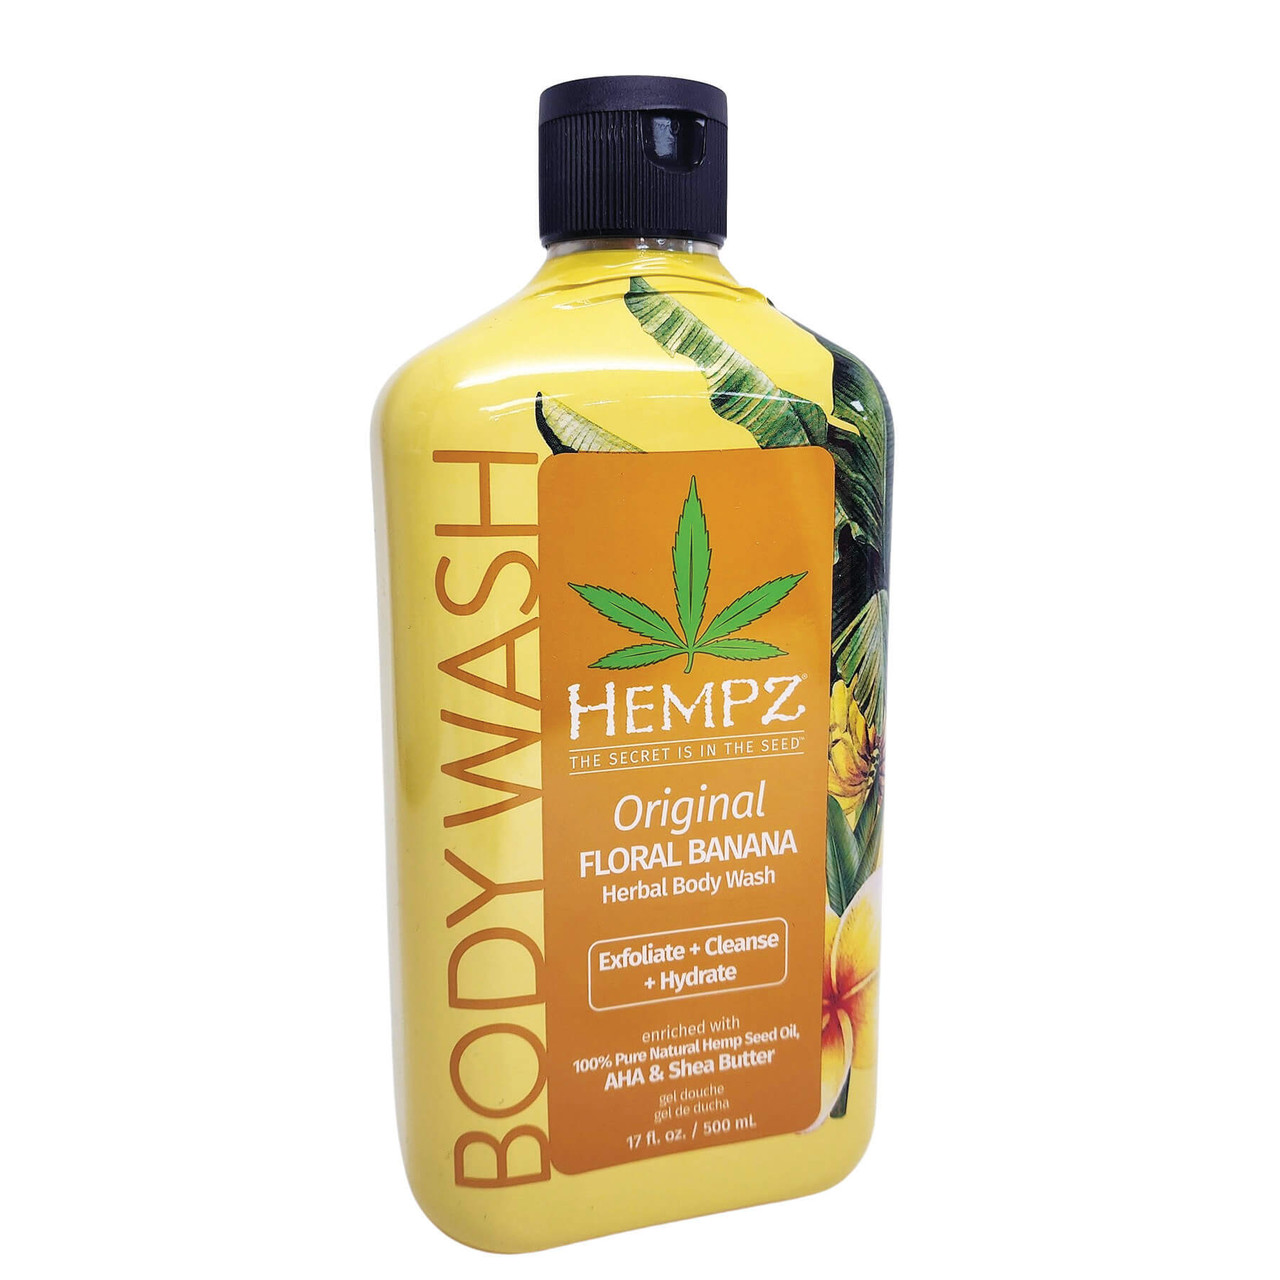 Hempz Original Floral Banana Herbal Body Wash 17oz